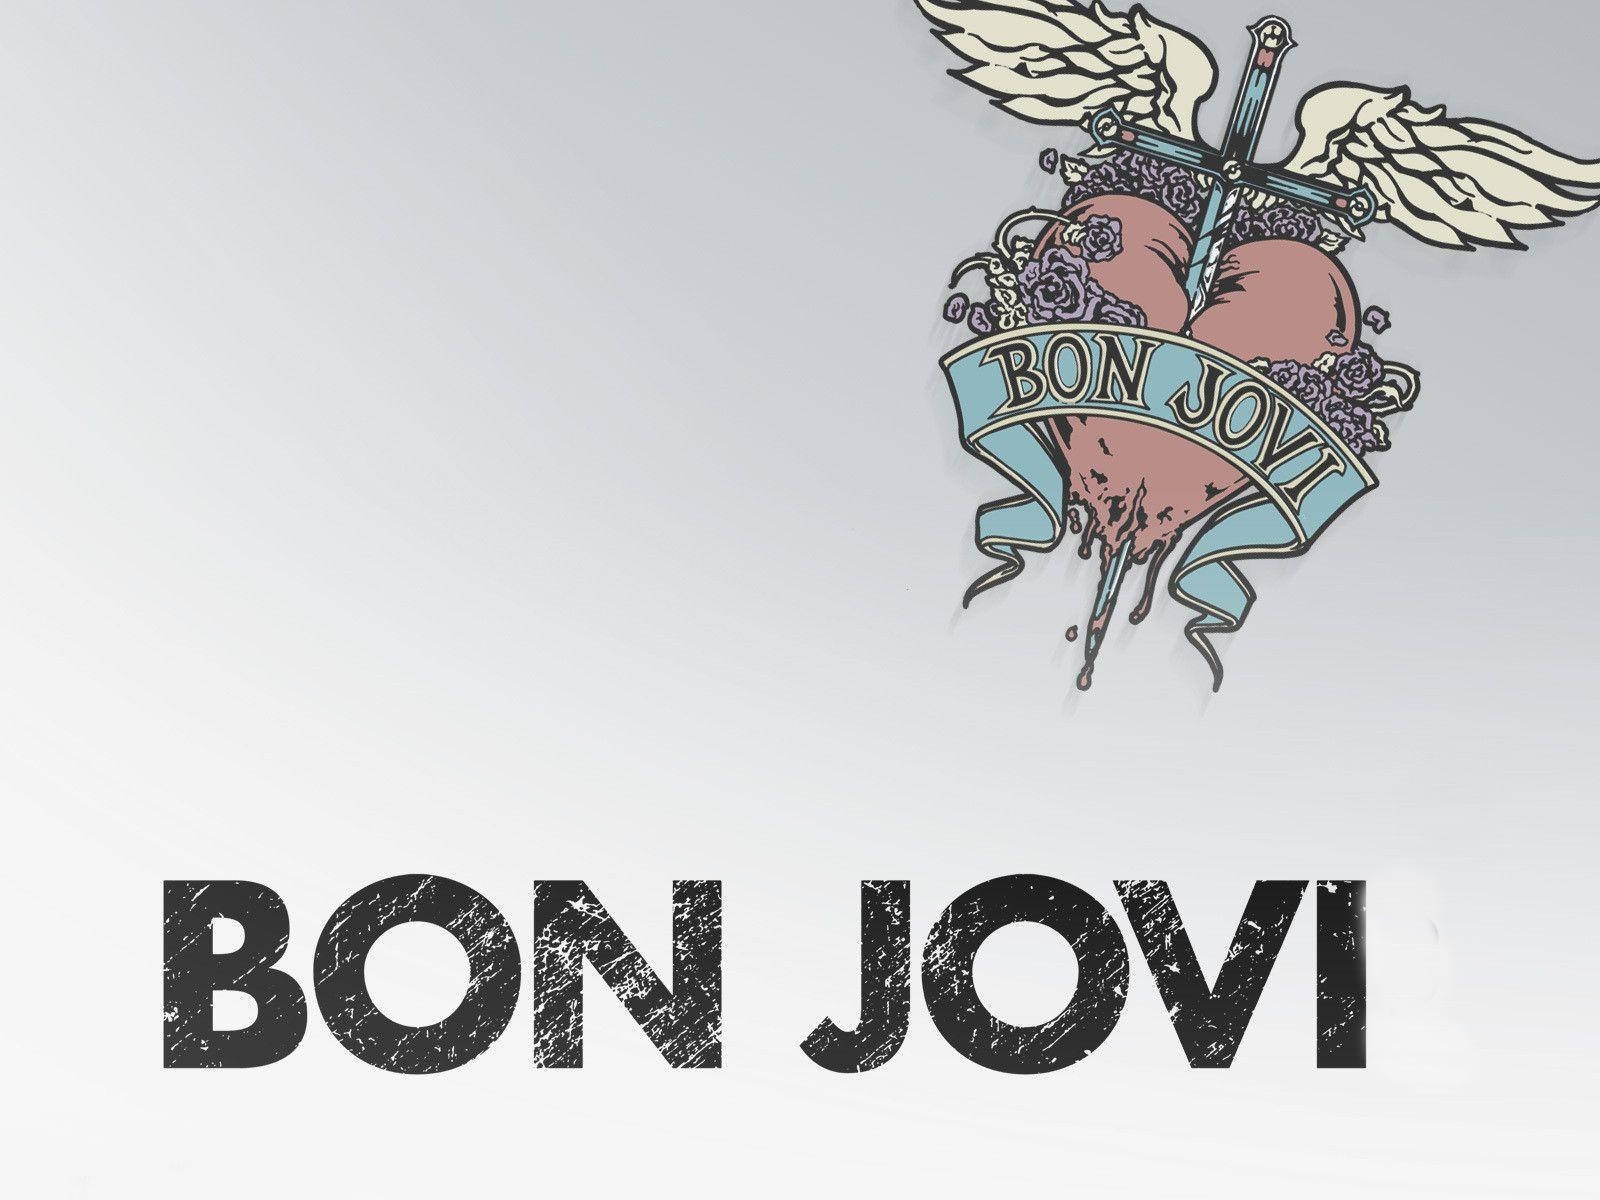 Amerikansk rockband Bon Jovi logo fanart Wallpaper